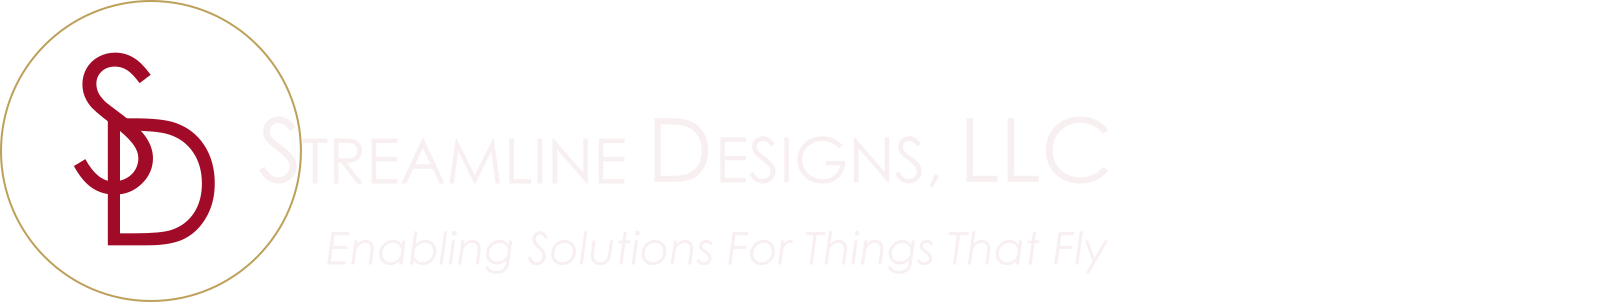 Streamline Designs, LLC